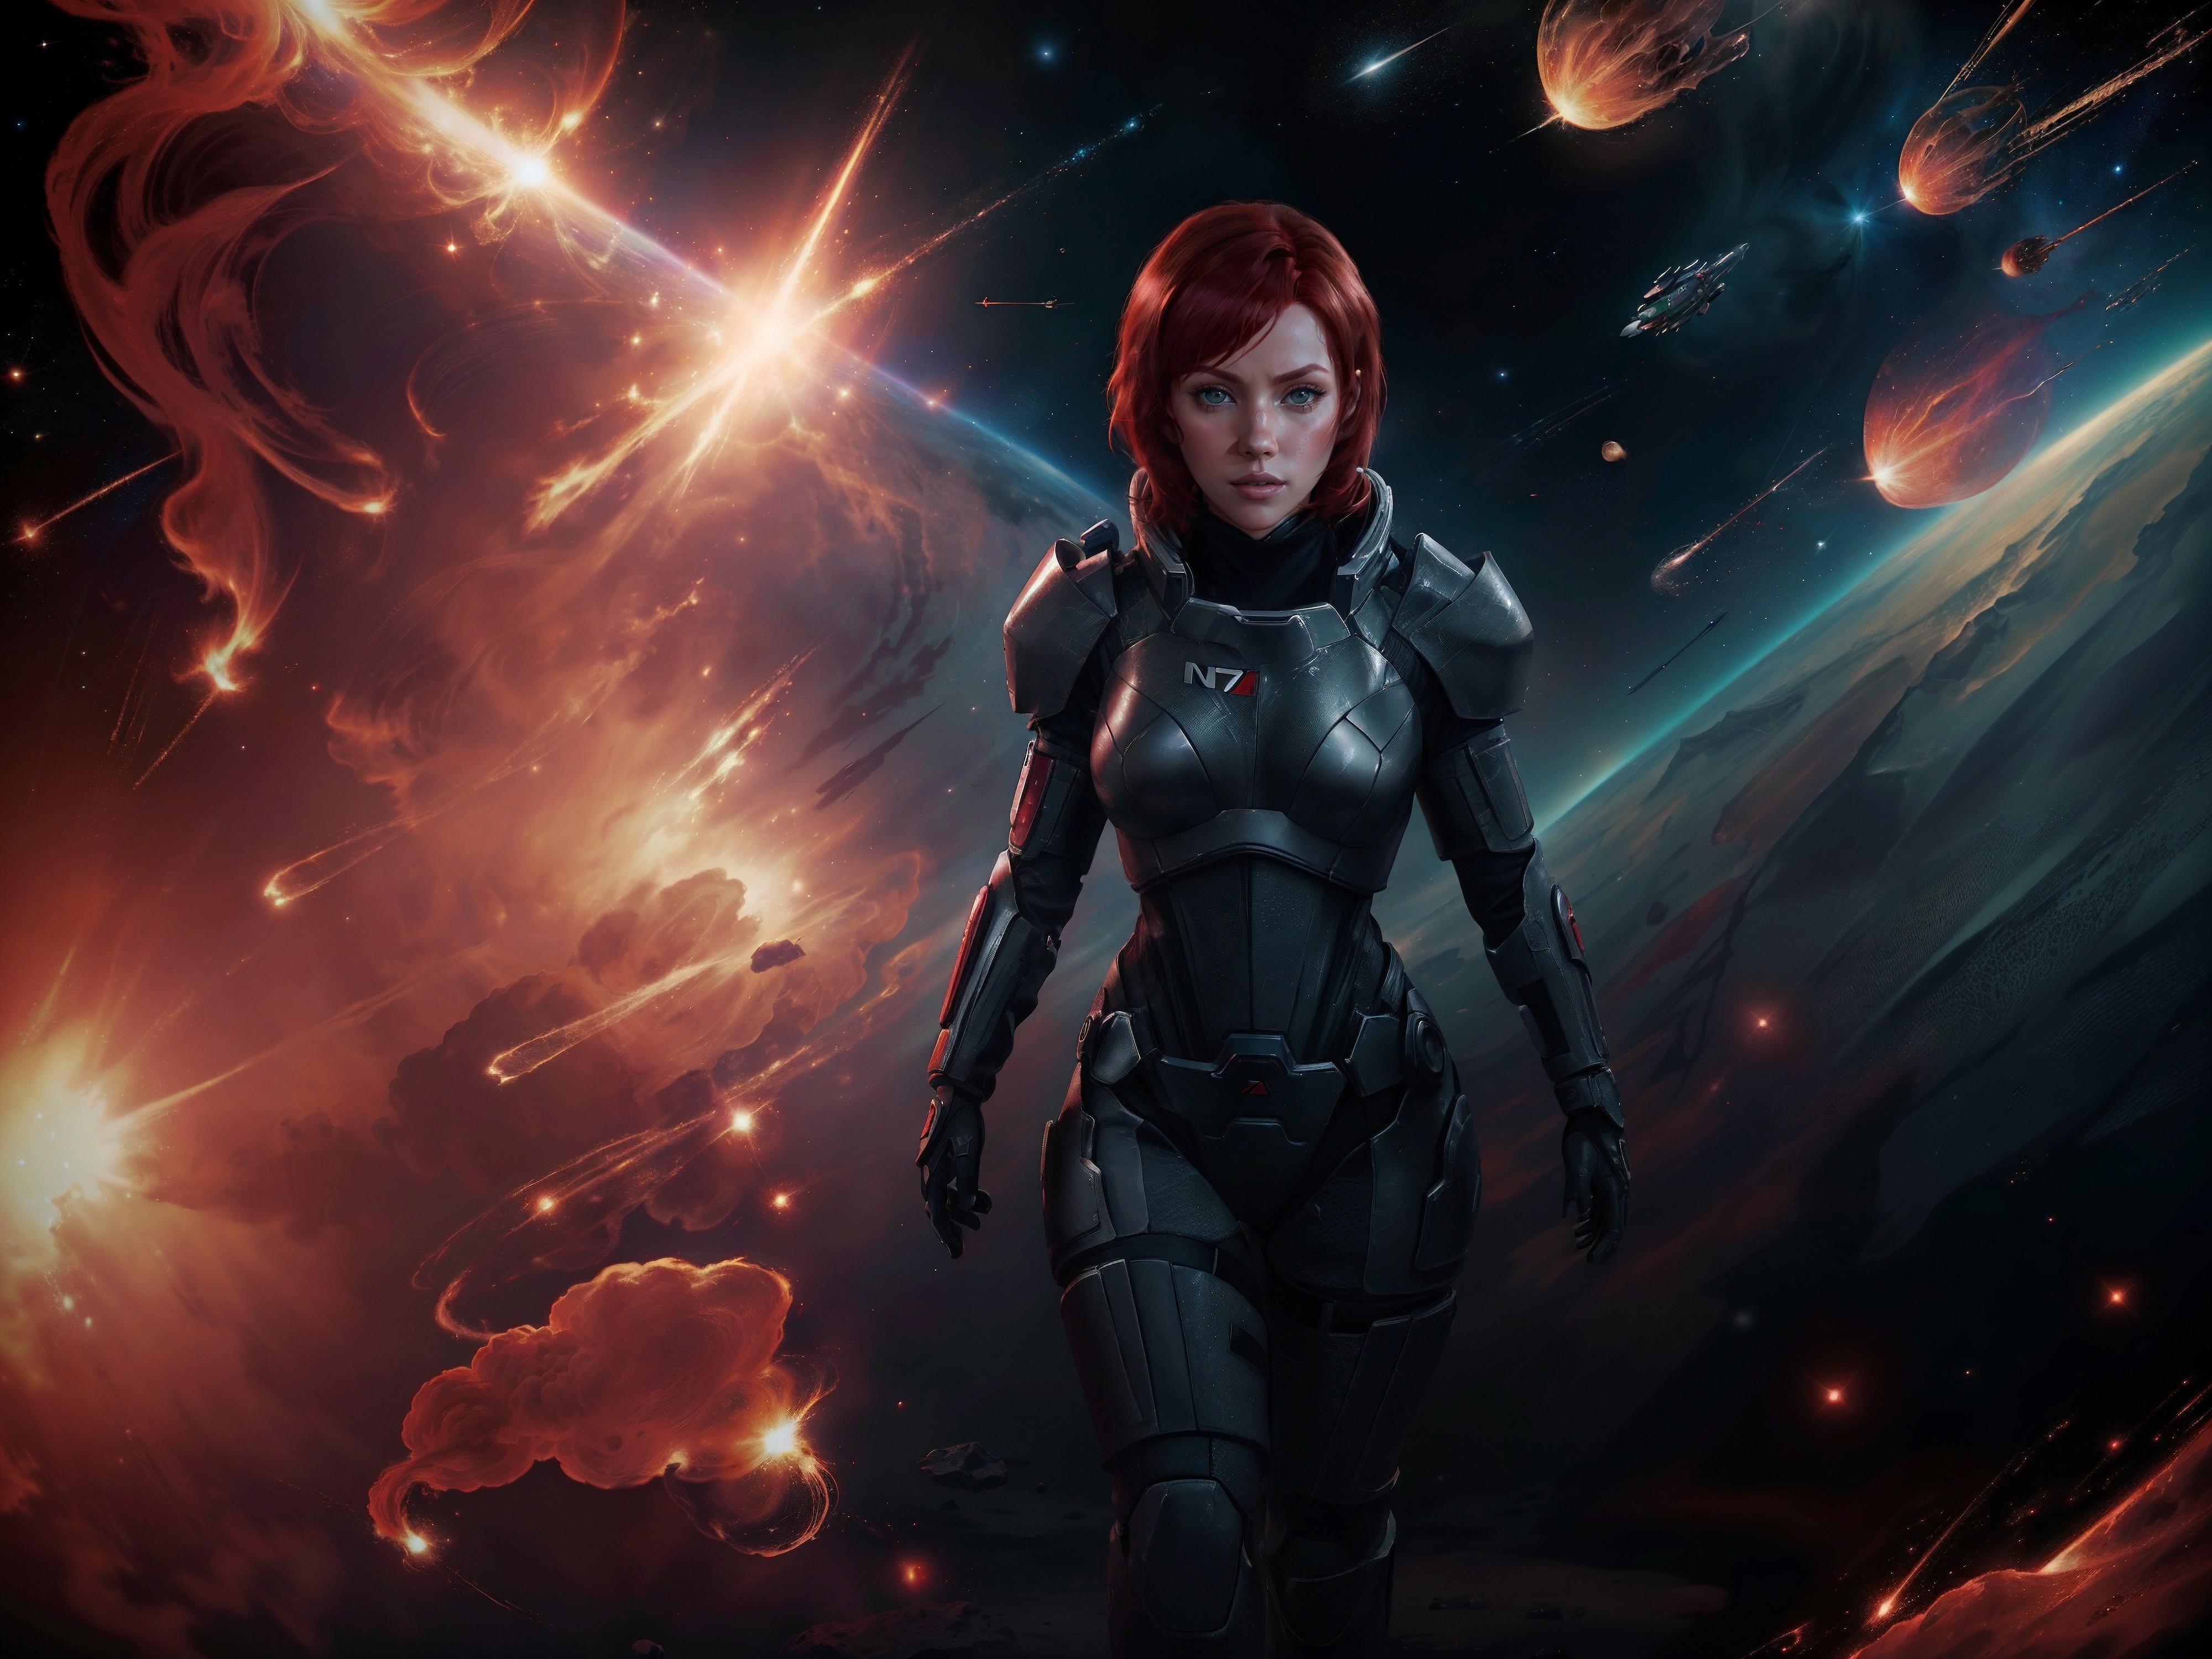 N7 Armor (Mass Effect) LoRA image by Taloji